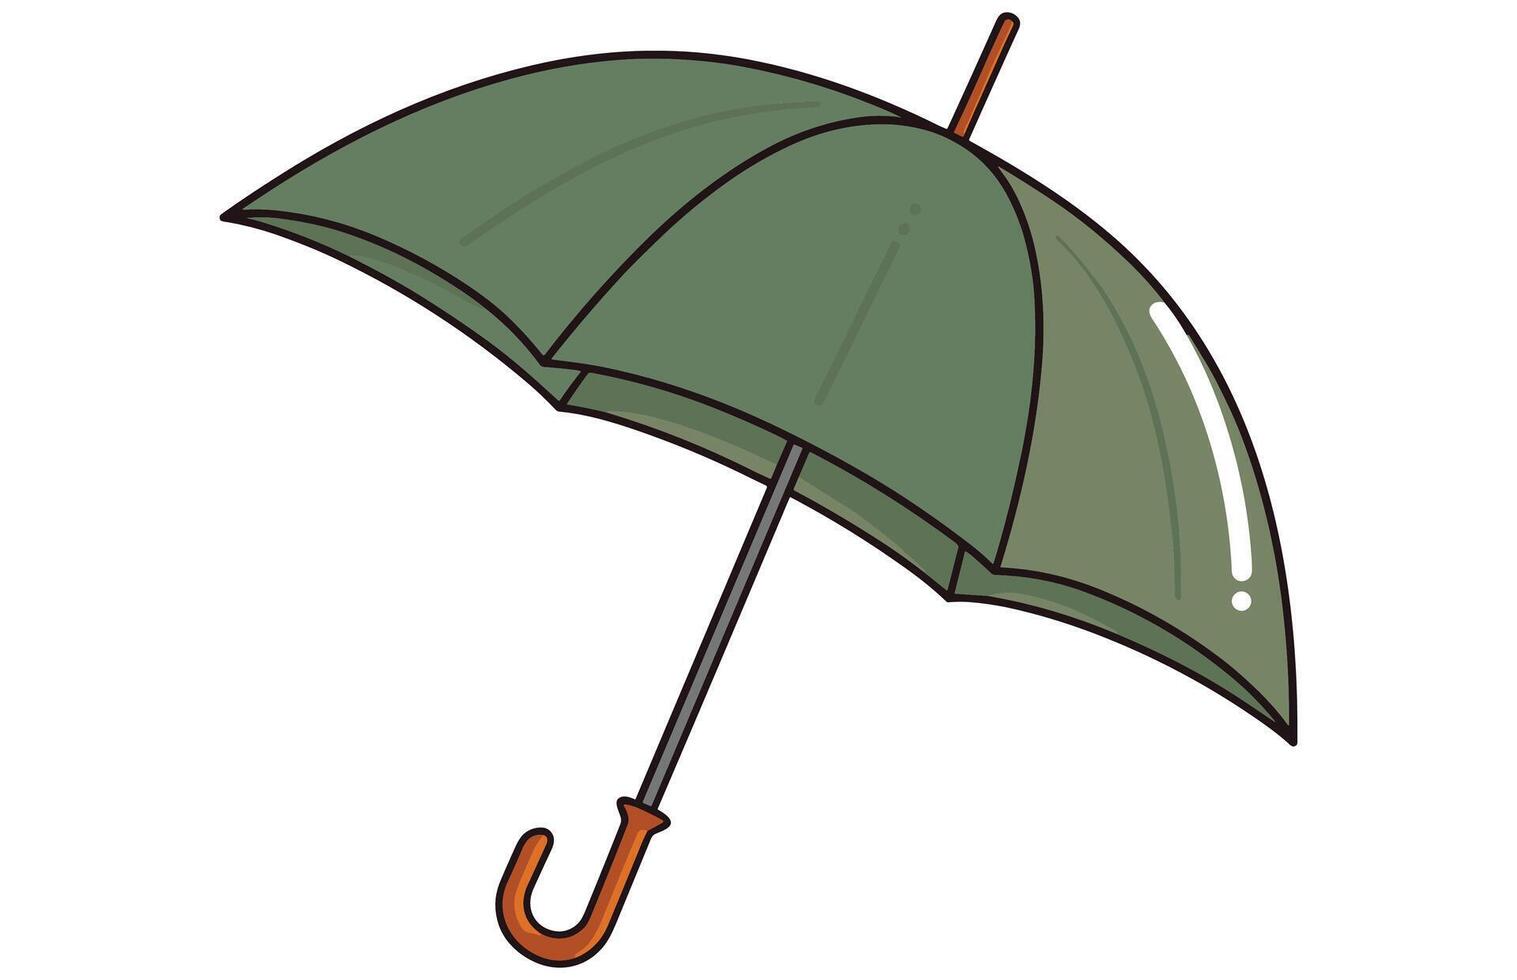 Umbrella Flat Illustration, Cartoon umbrella icon, Colorful Open Umbrella. vector